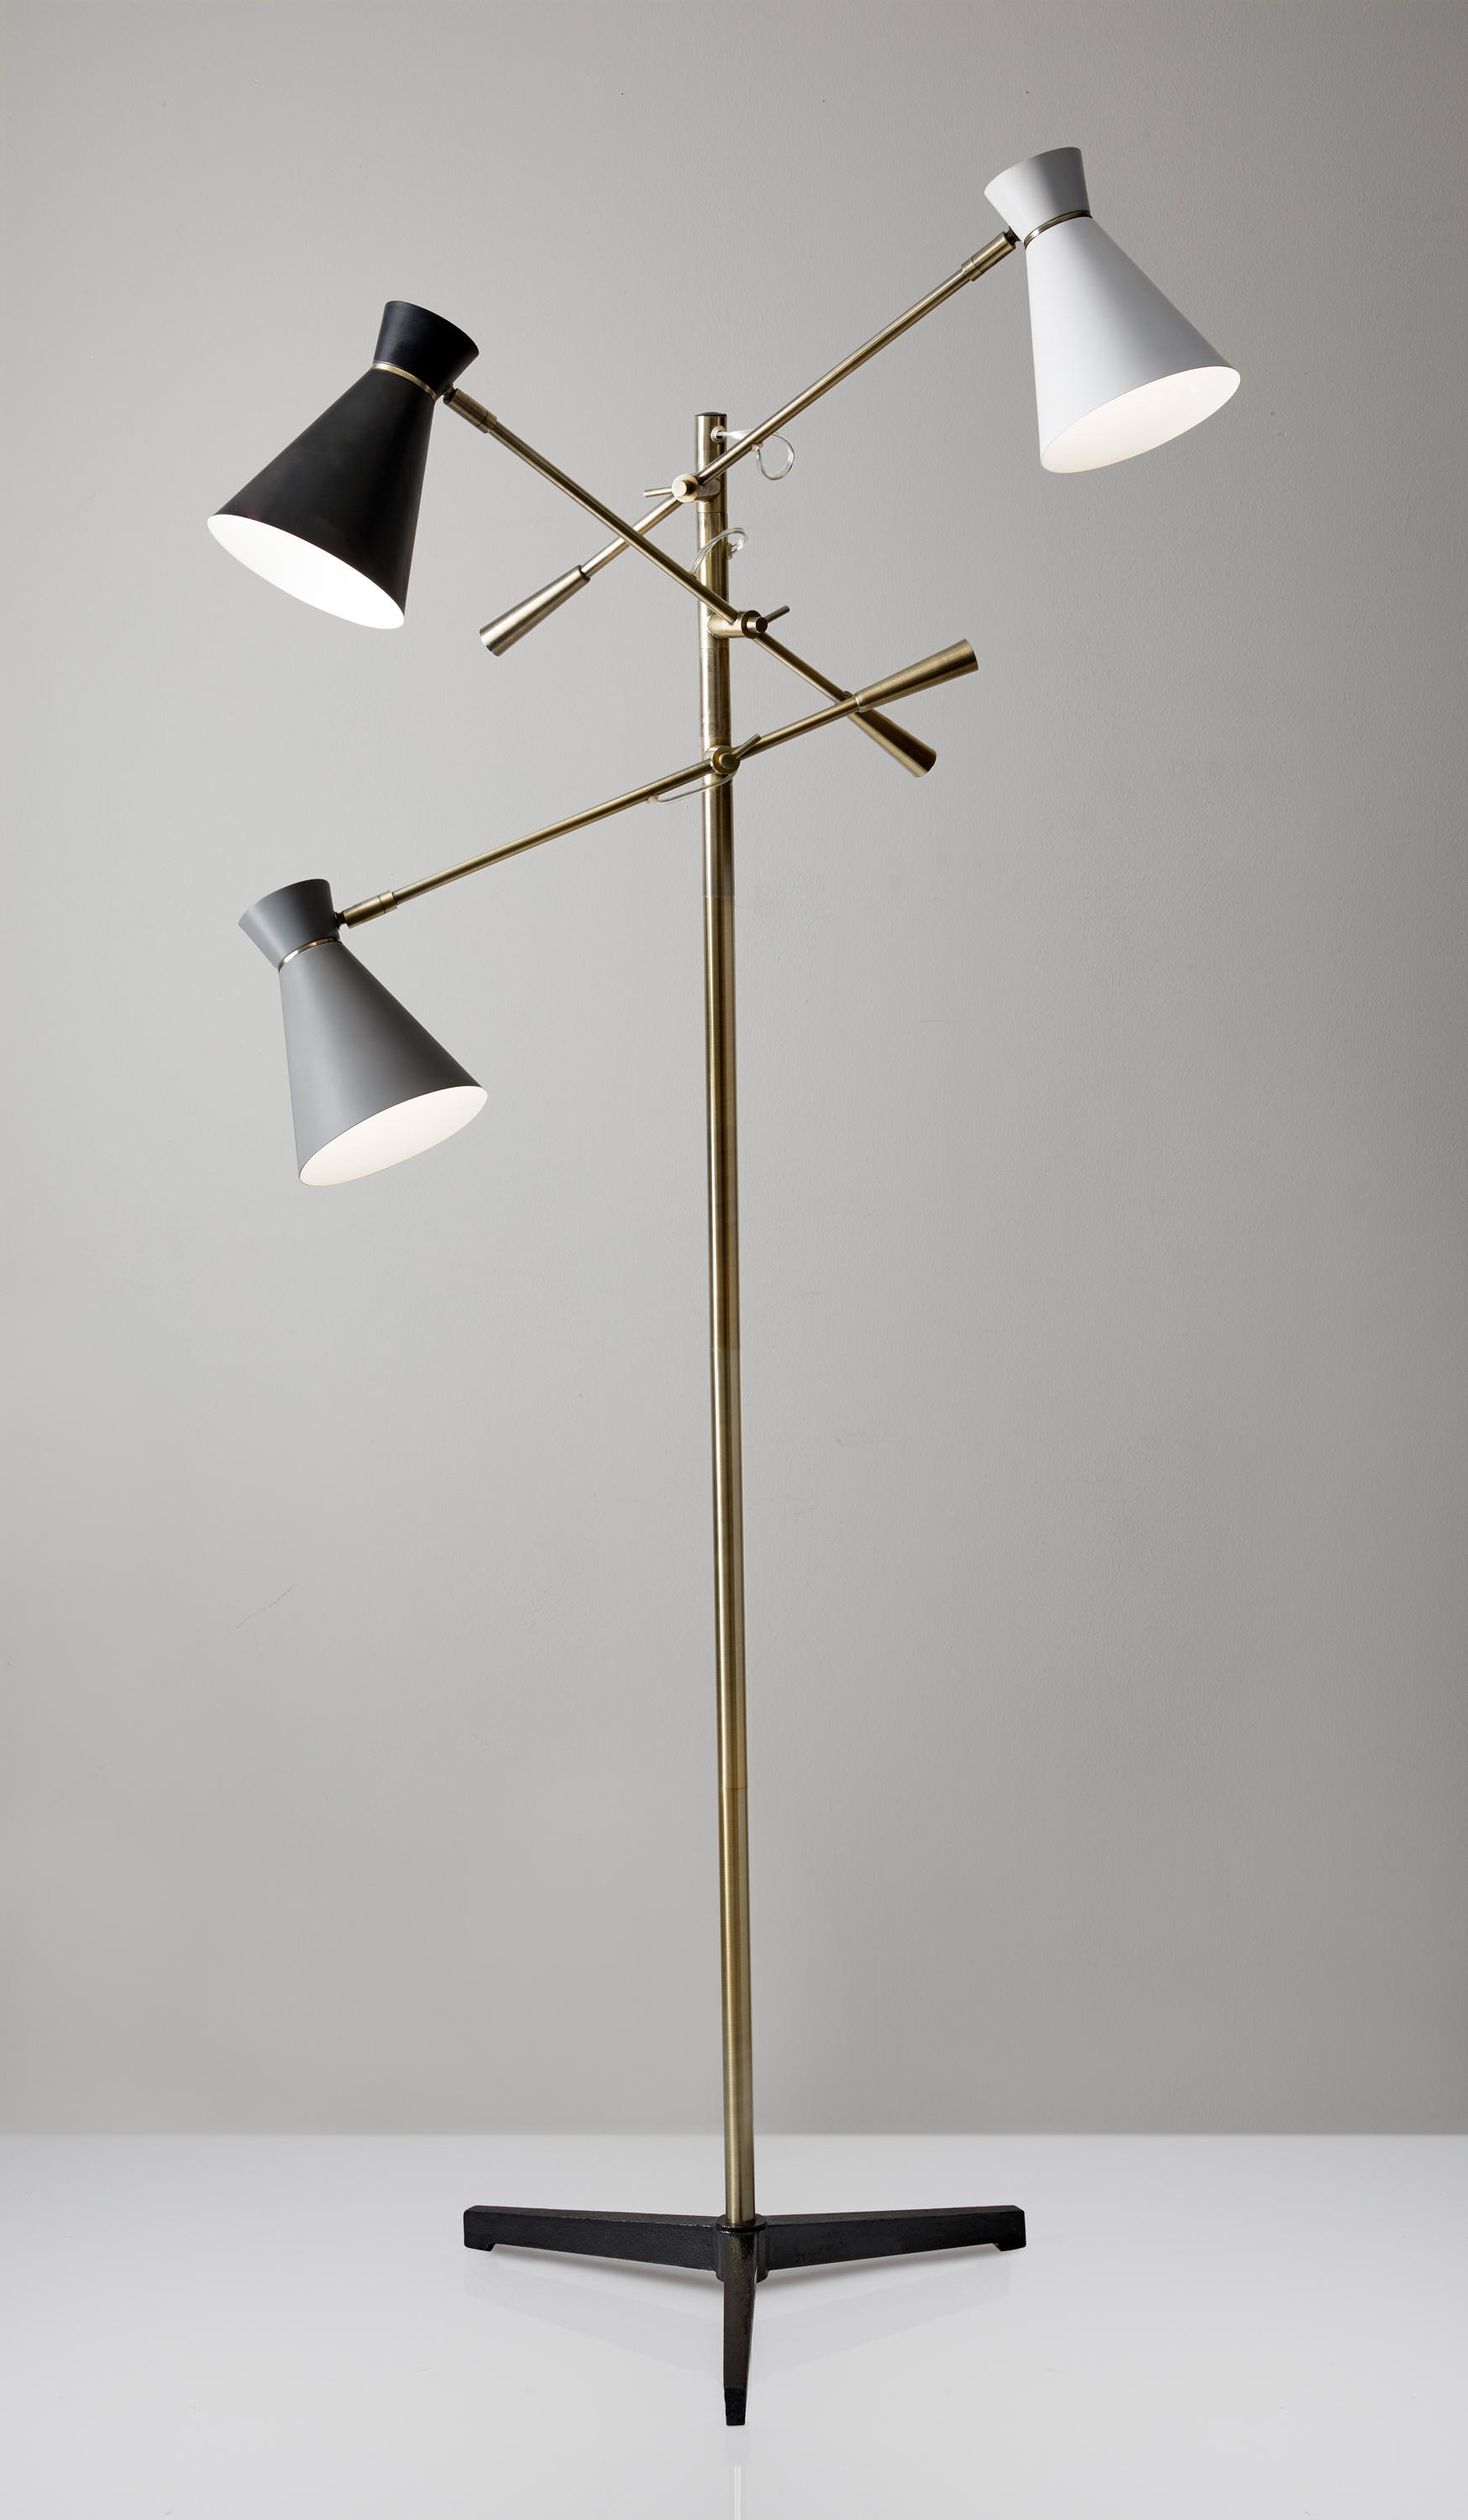 Lyle 3 Arm Floor Lamp Designermbel Architonic pertaining to dimensions 1748 X 3000